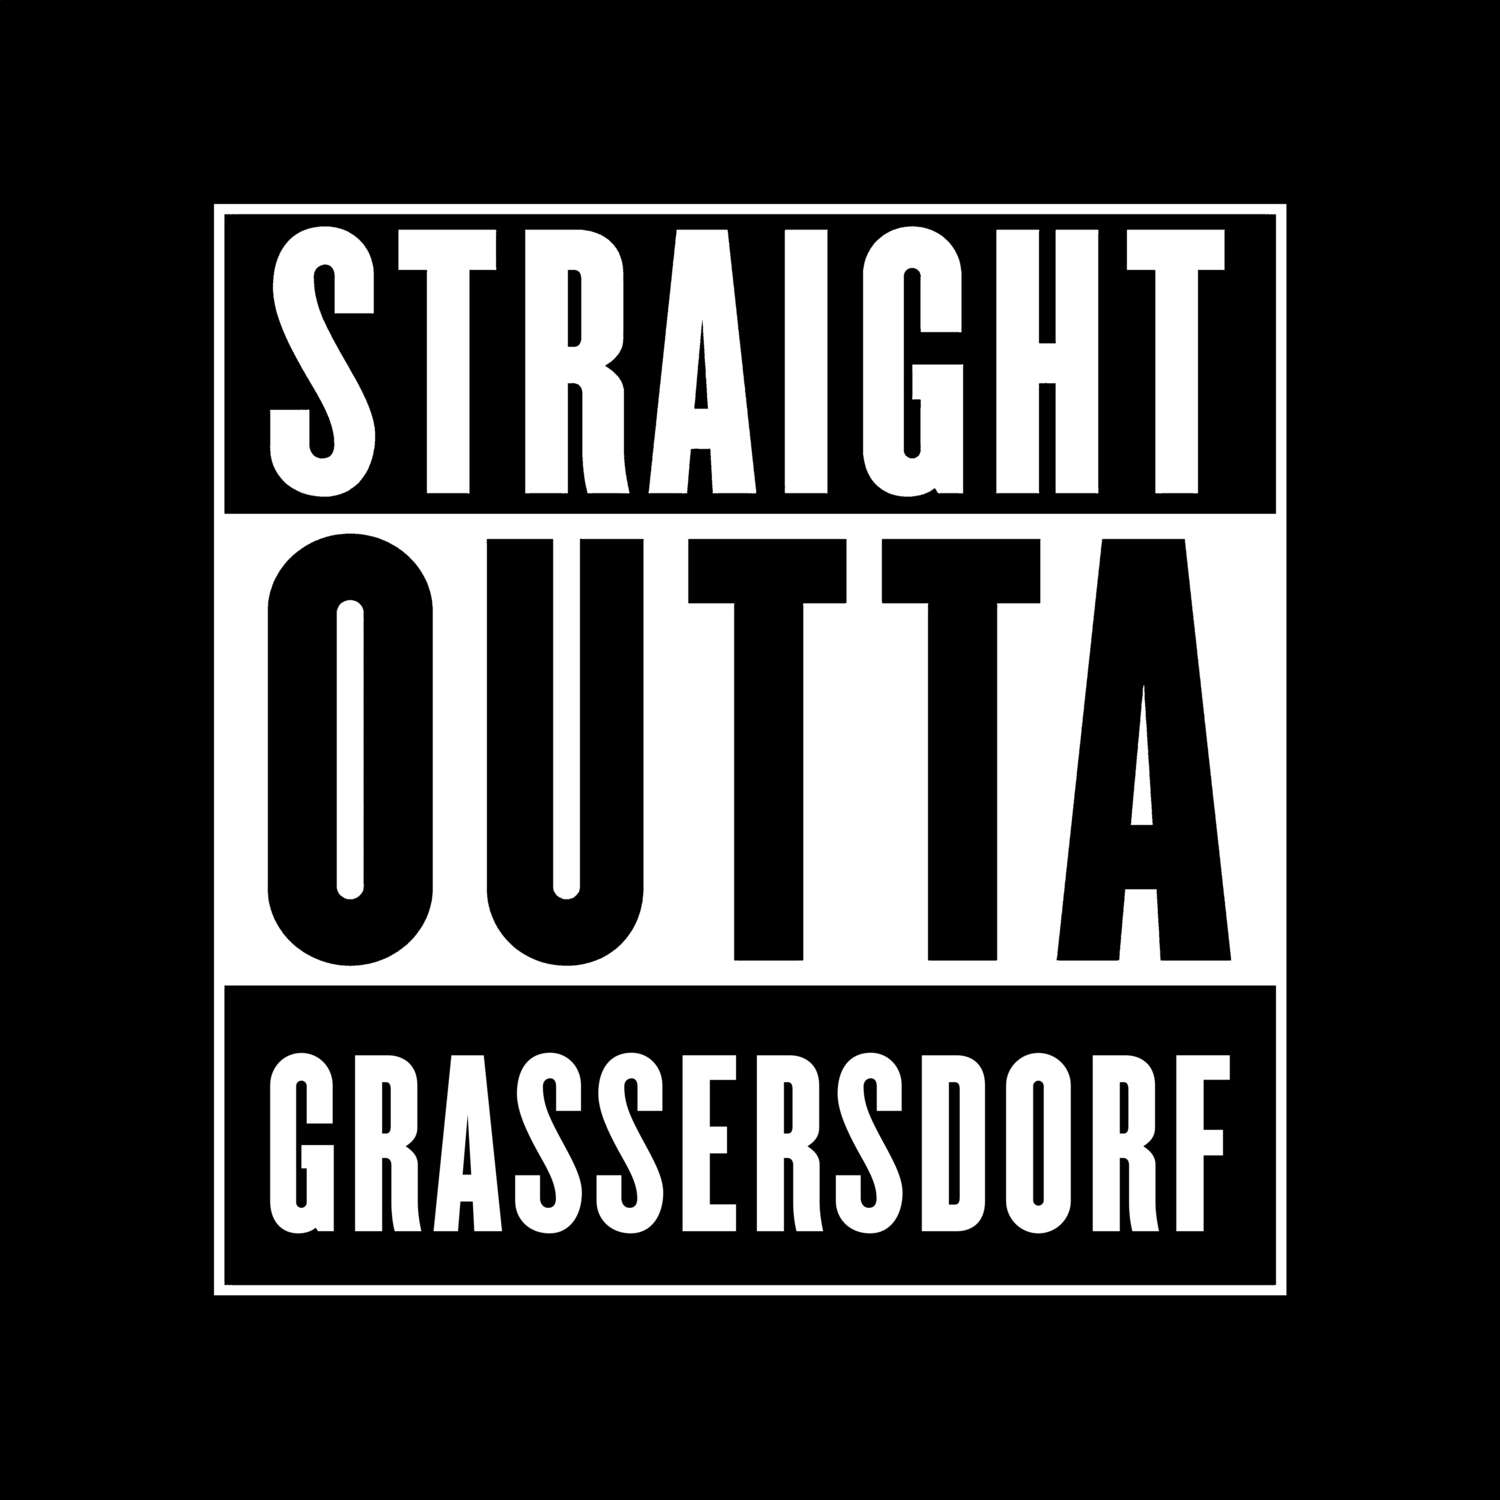 Grassersdorf T-Shirt »Straight Outta«